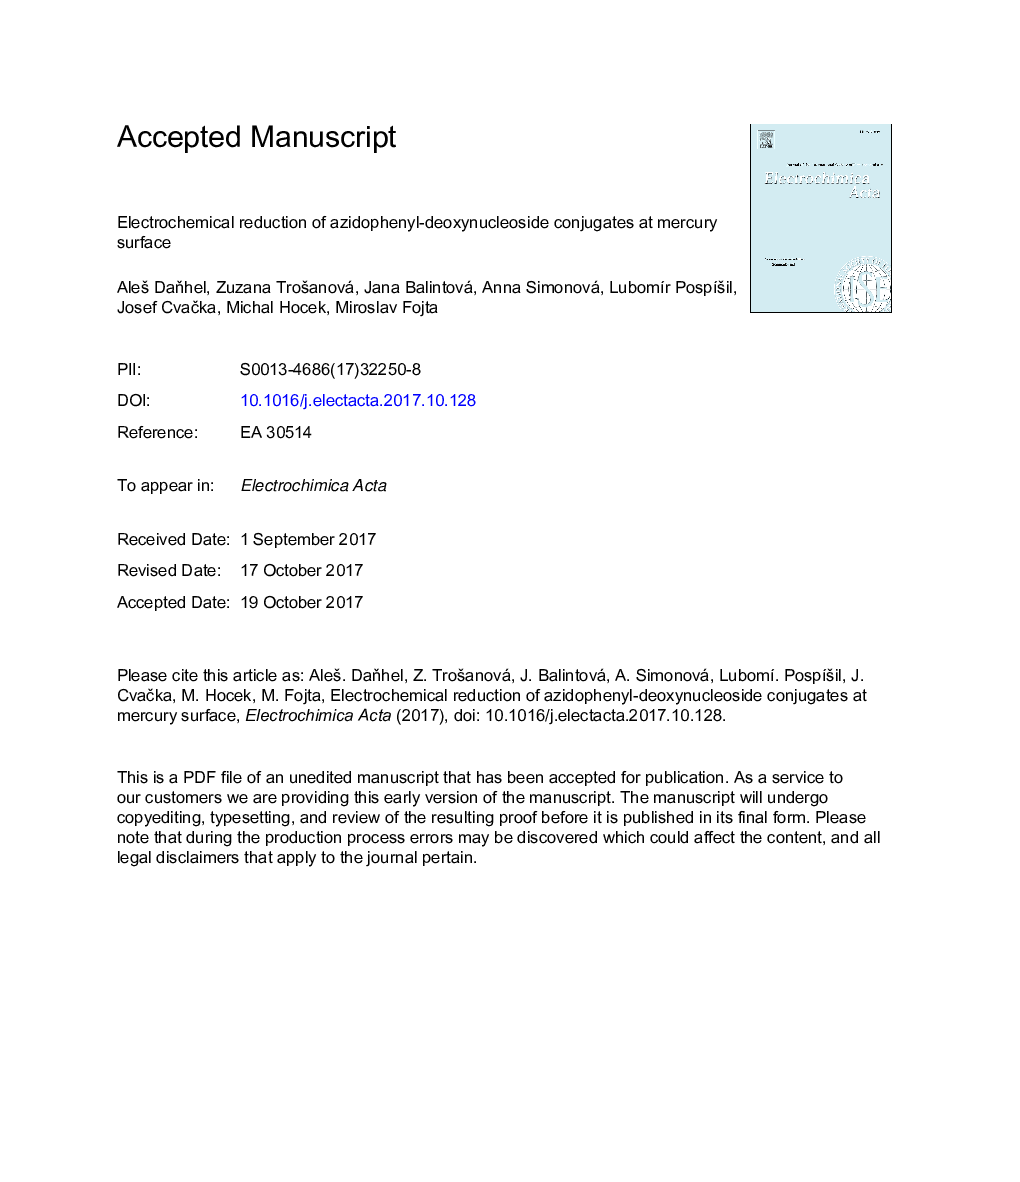 Electrochemical reduction of azidophenyl-deoxynucleoside conjugates at mercury surface